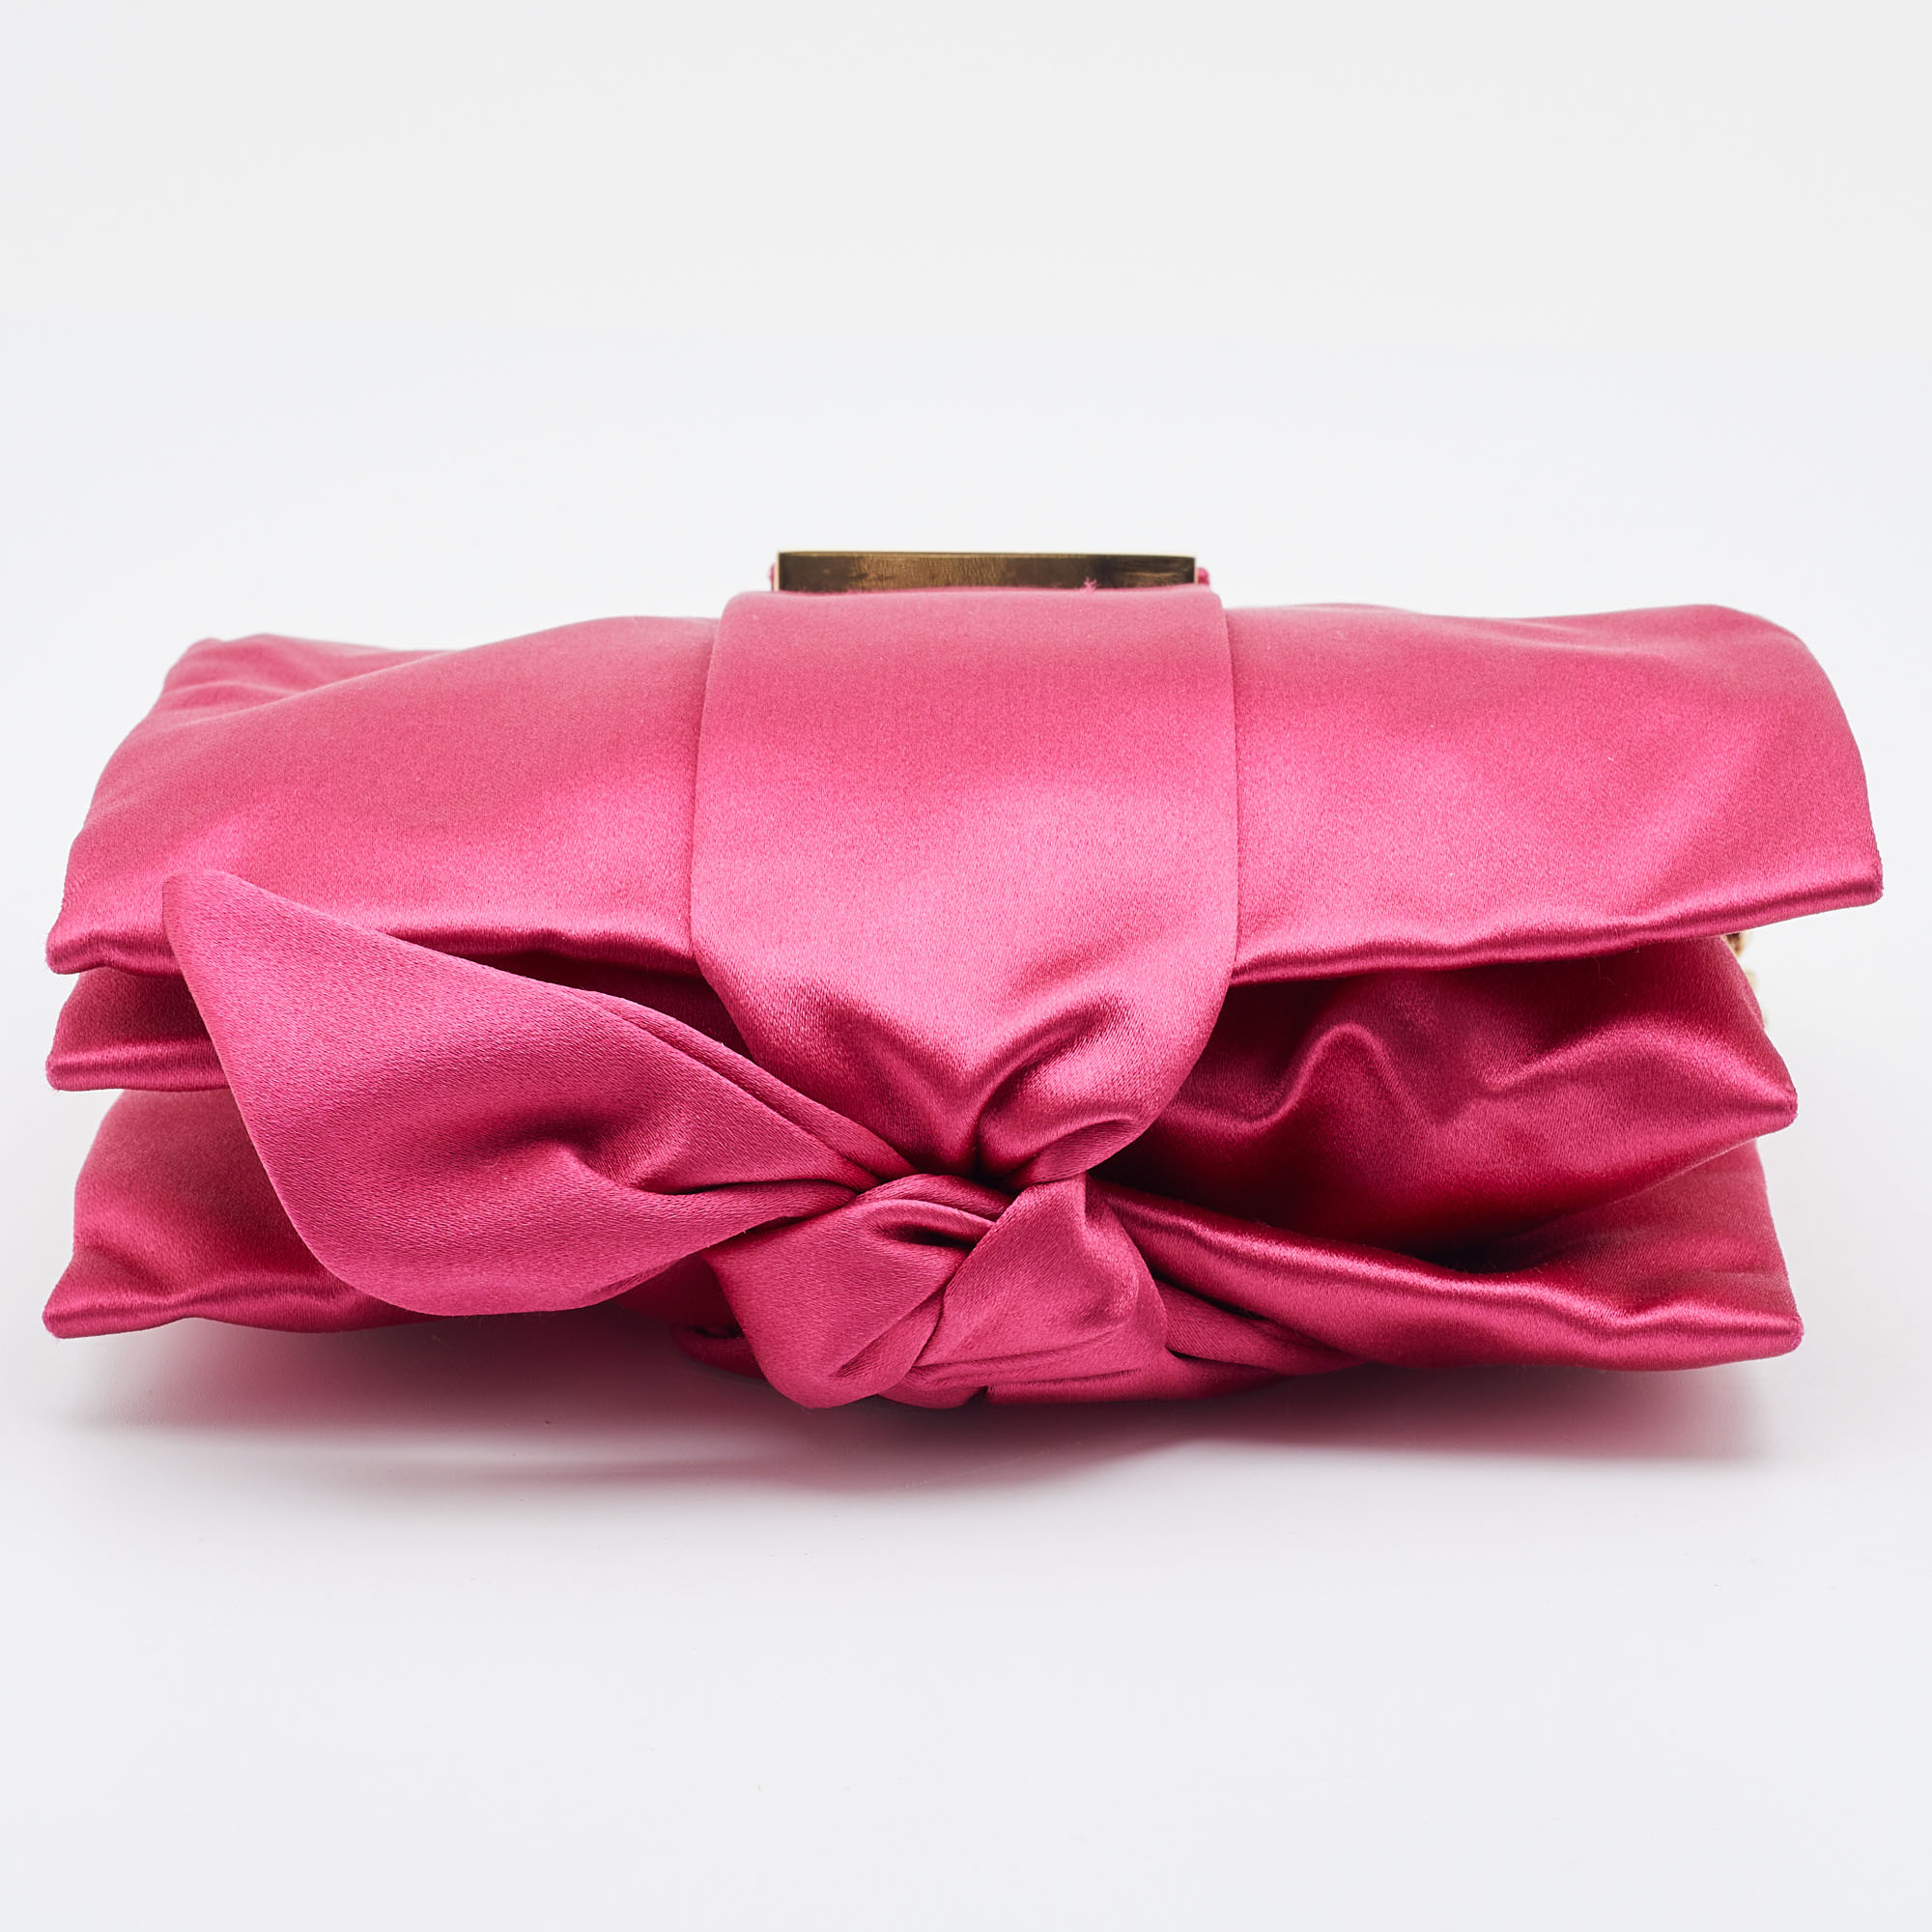 Emporio Armani Pink Satin Chain Bag